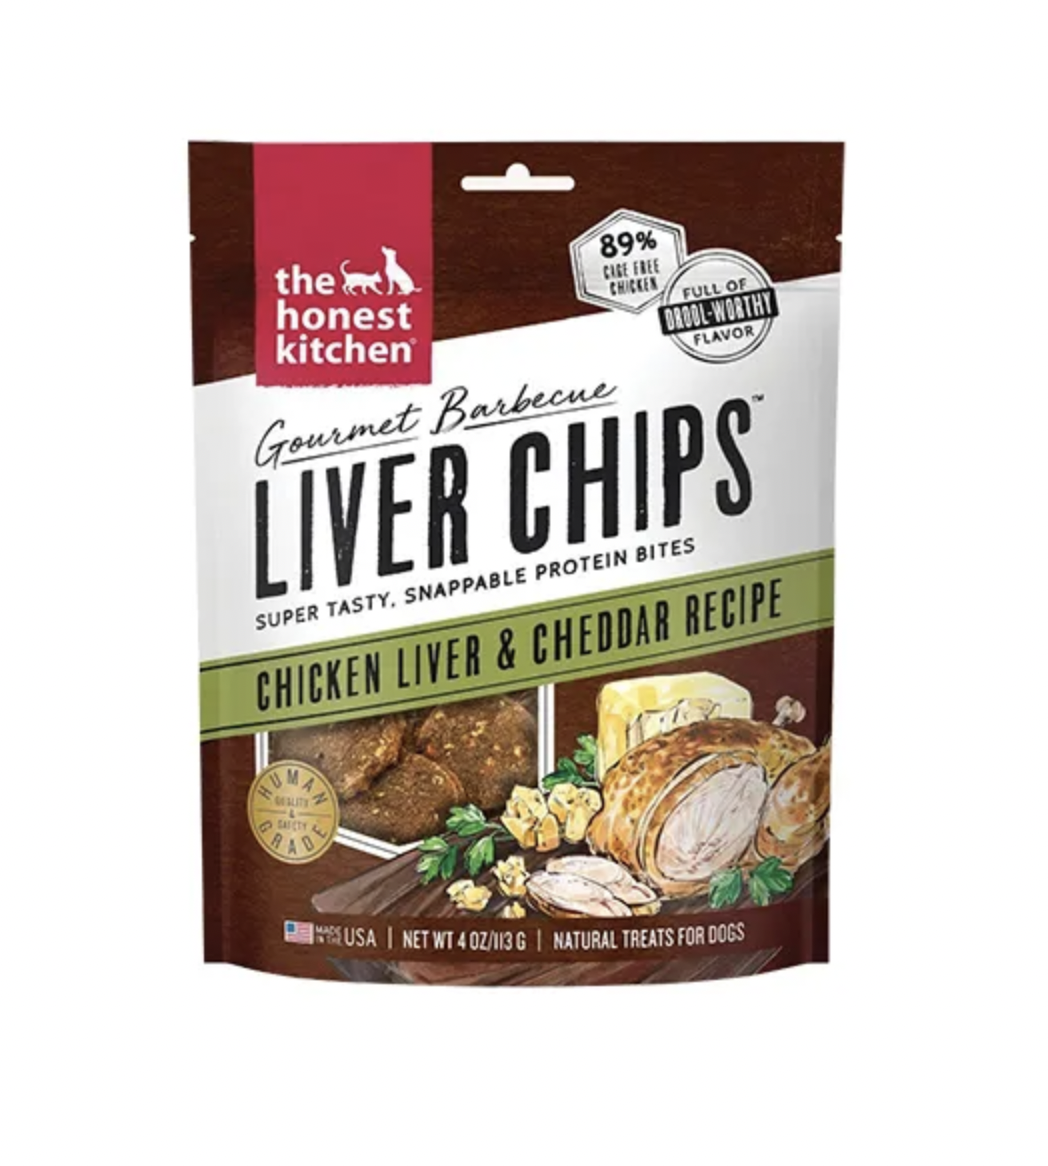 Liver Chips - Chicken Liver & Cheddar Recipe - The Honest Kitchen